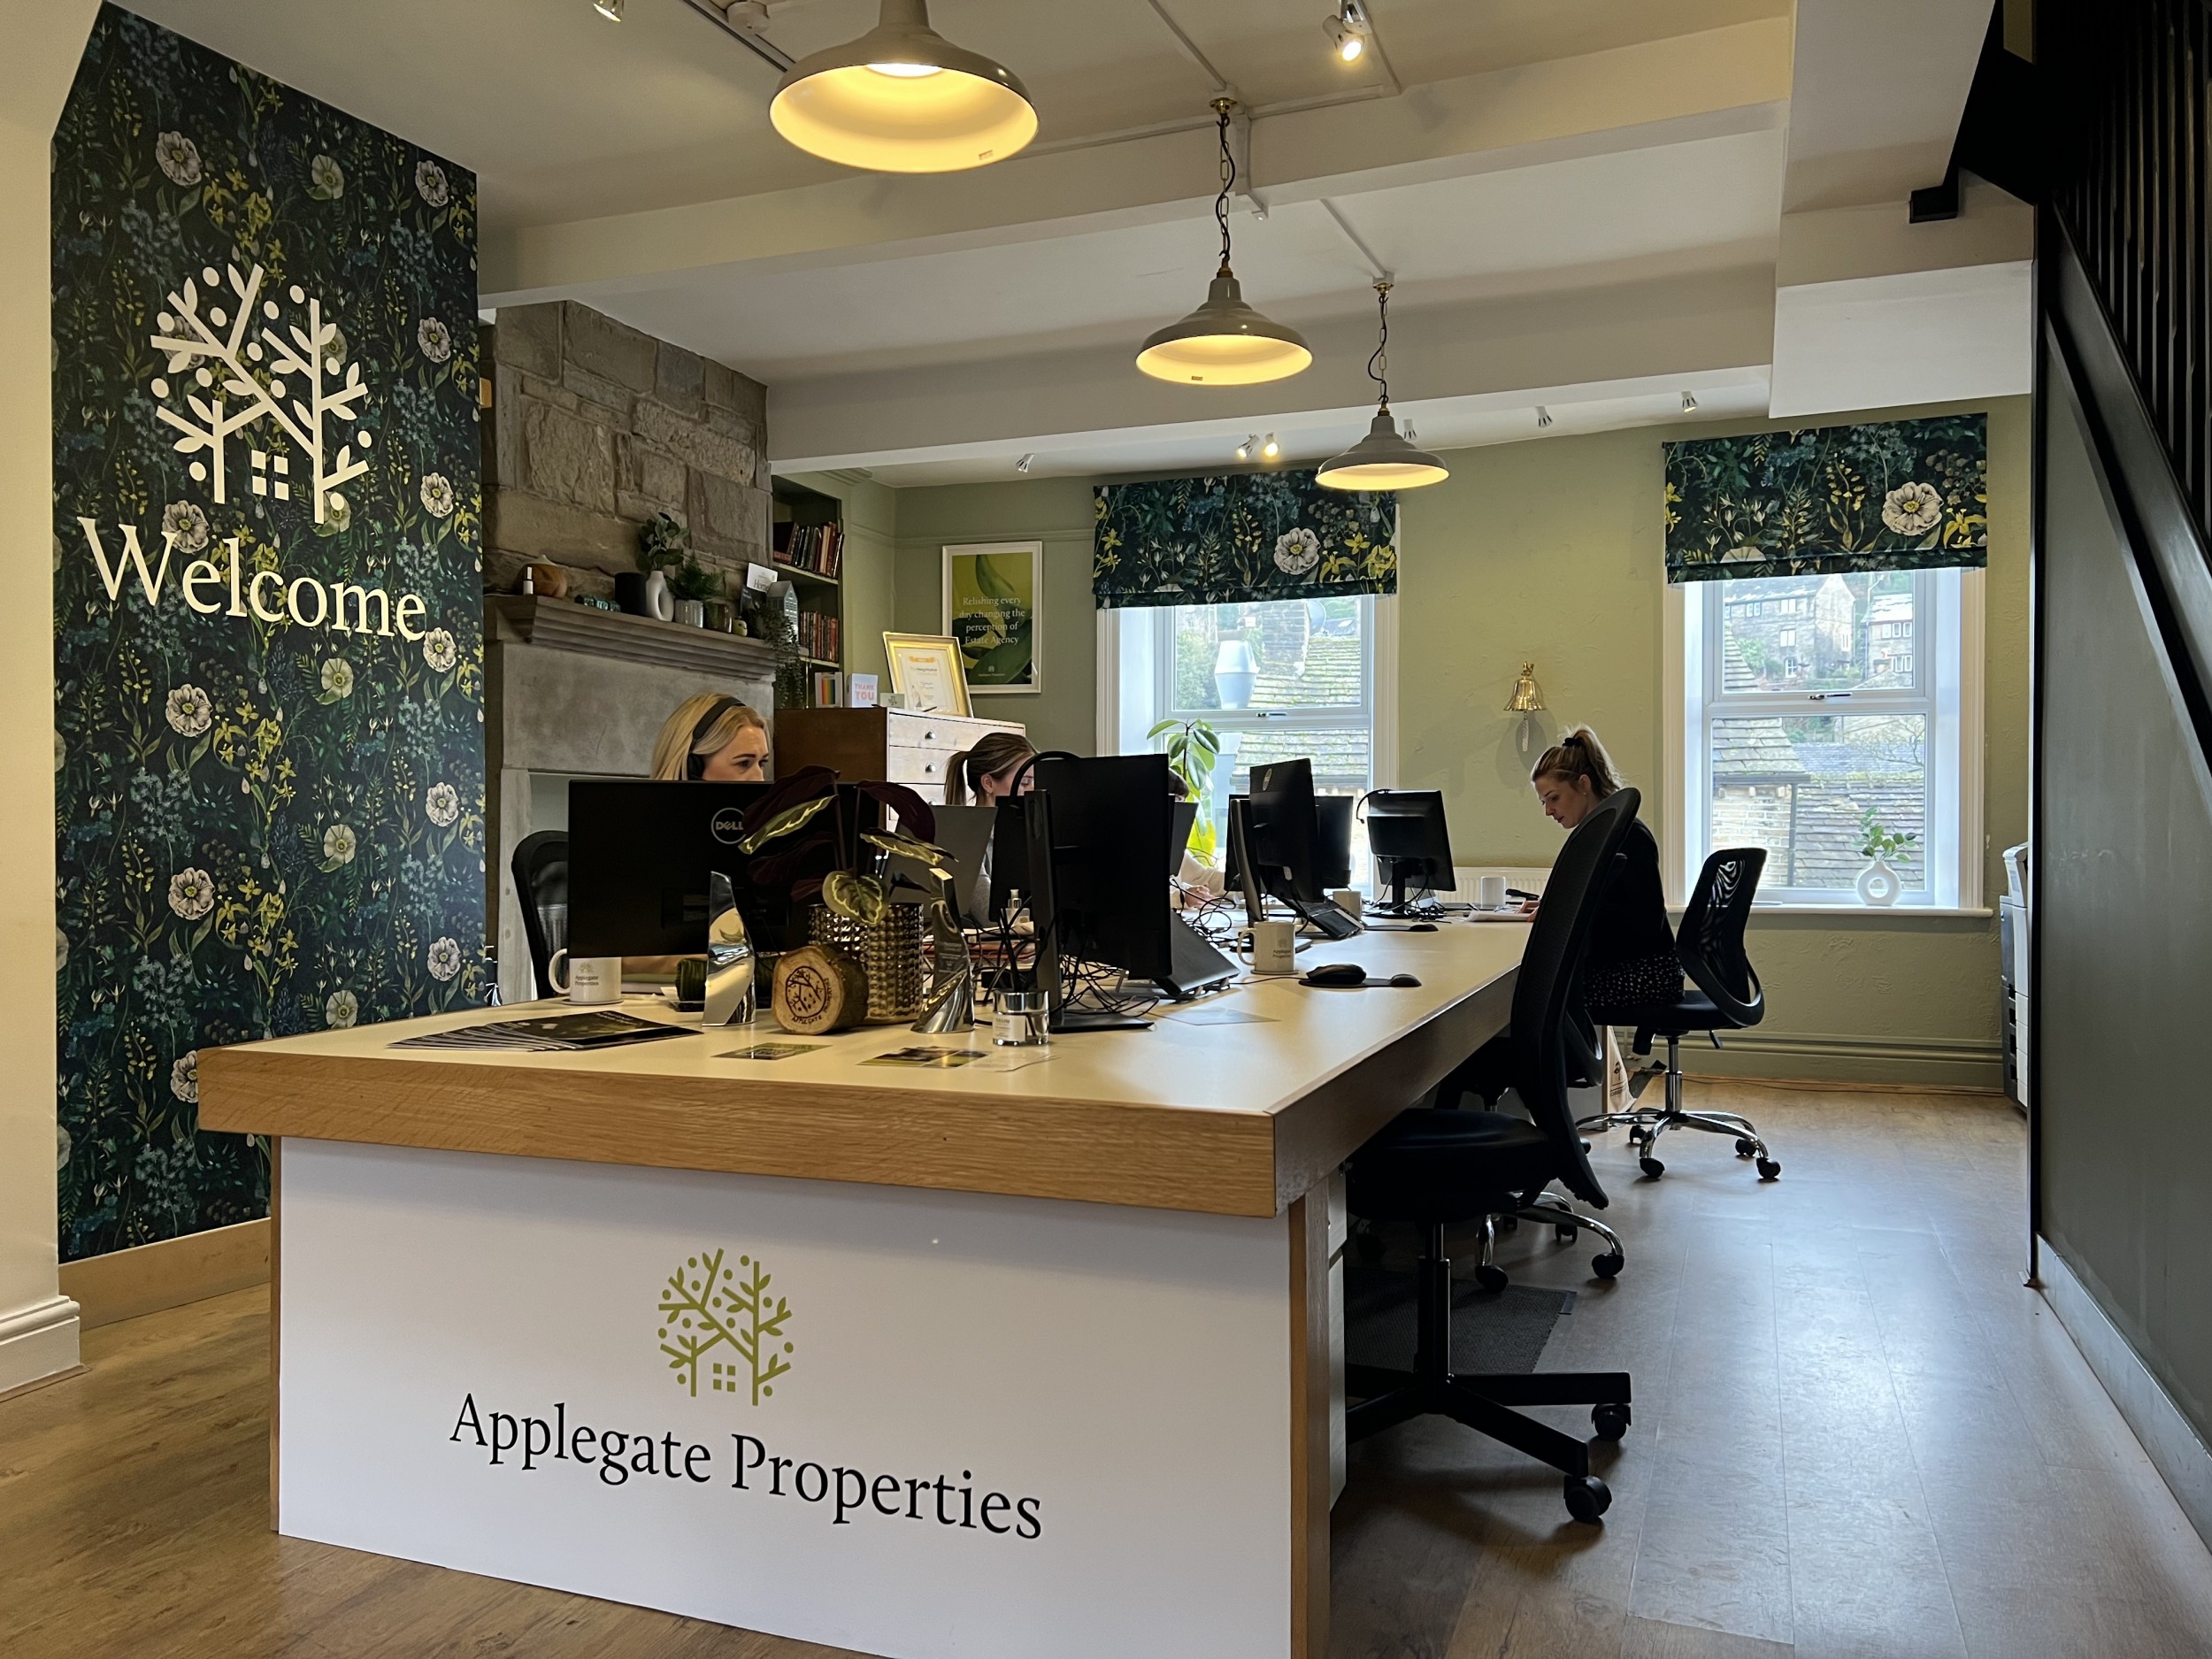 Applegate Properties: Setting the Standard for Estate Agents in Huddersfield